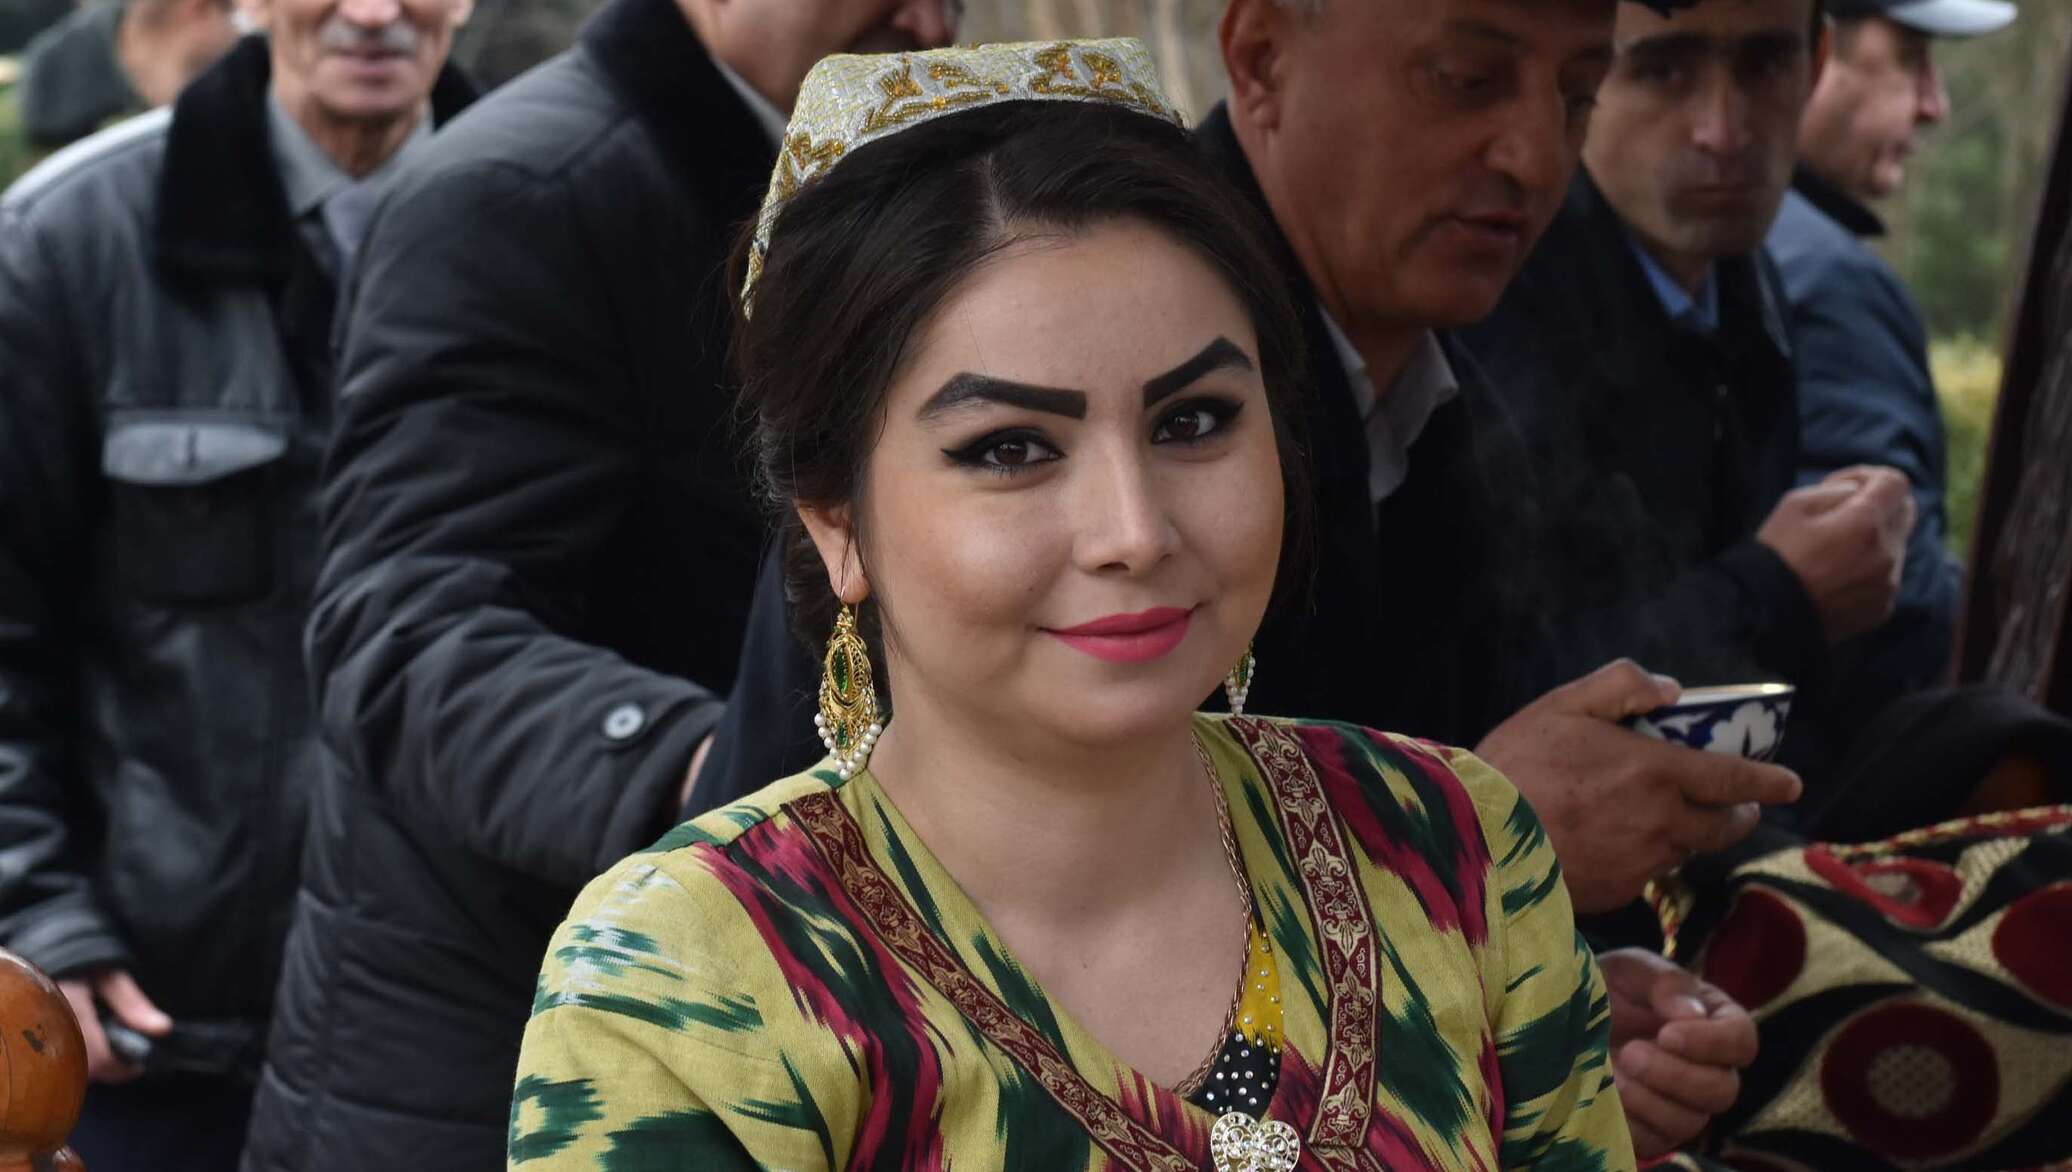 Таджикски виде. Женщины Таджикистана. Самая красивая женщина в Таджикистане. Узбекские женщины. Таджички для любви.